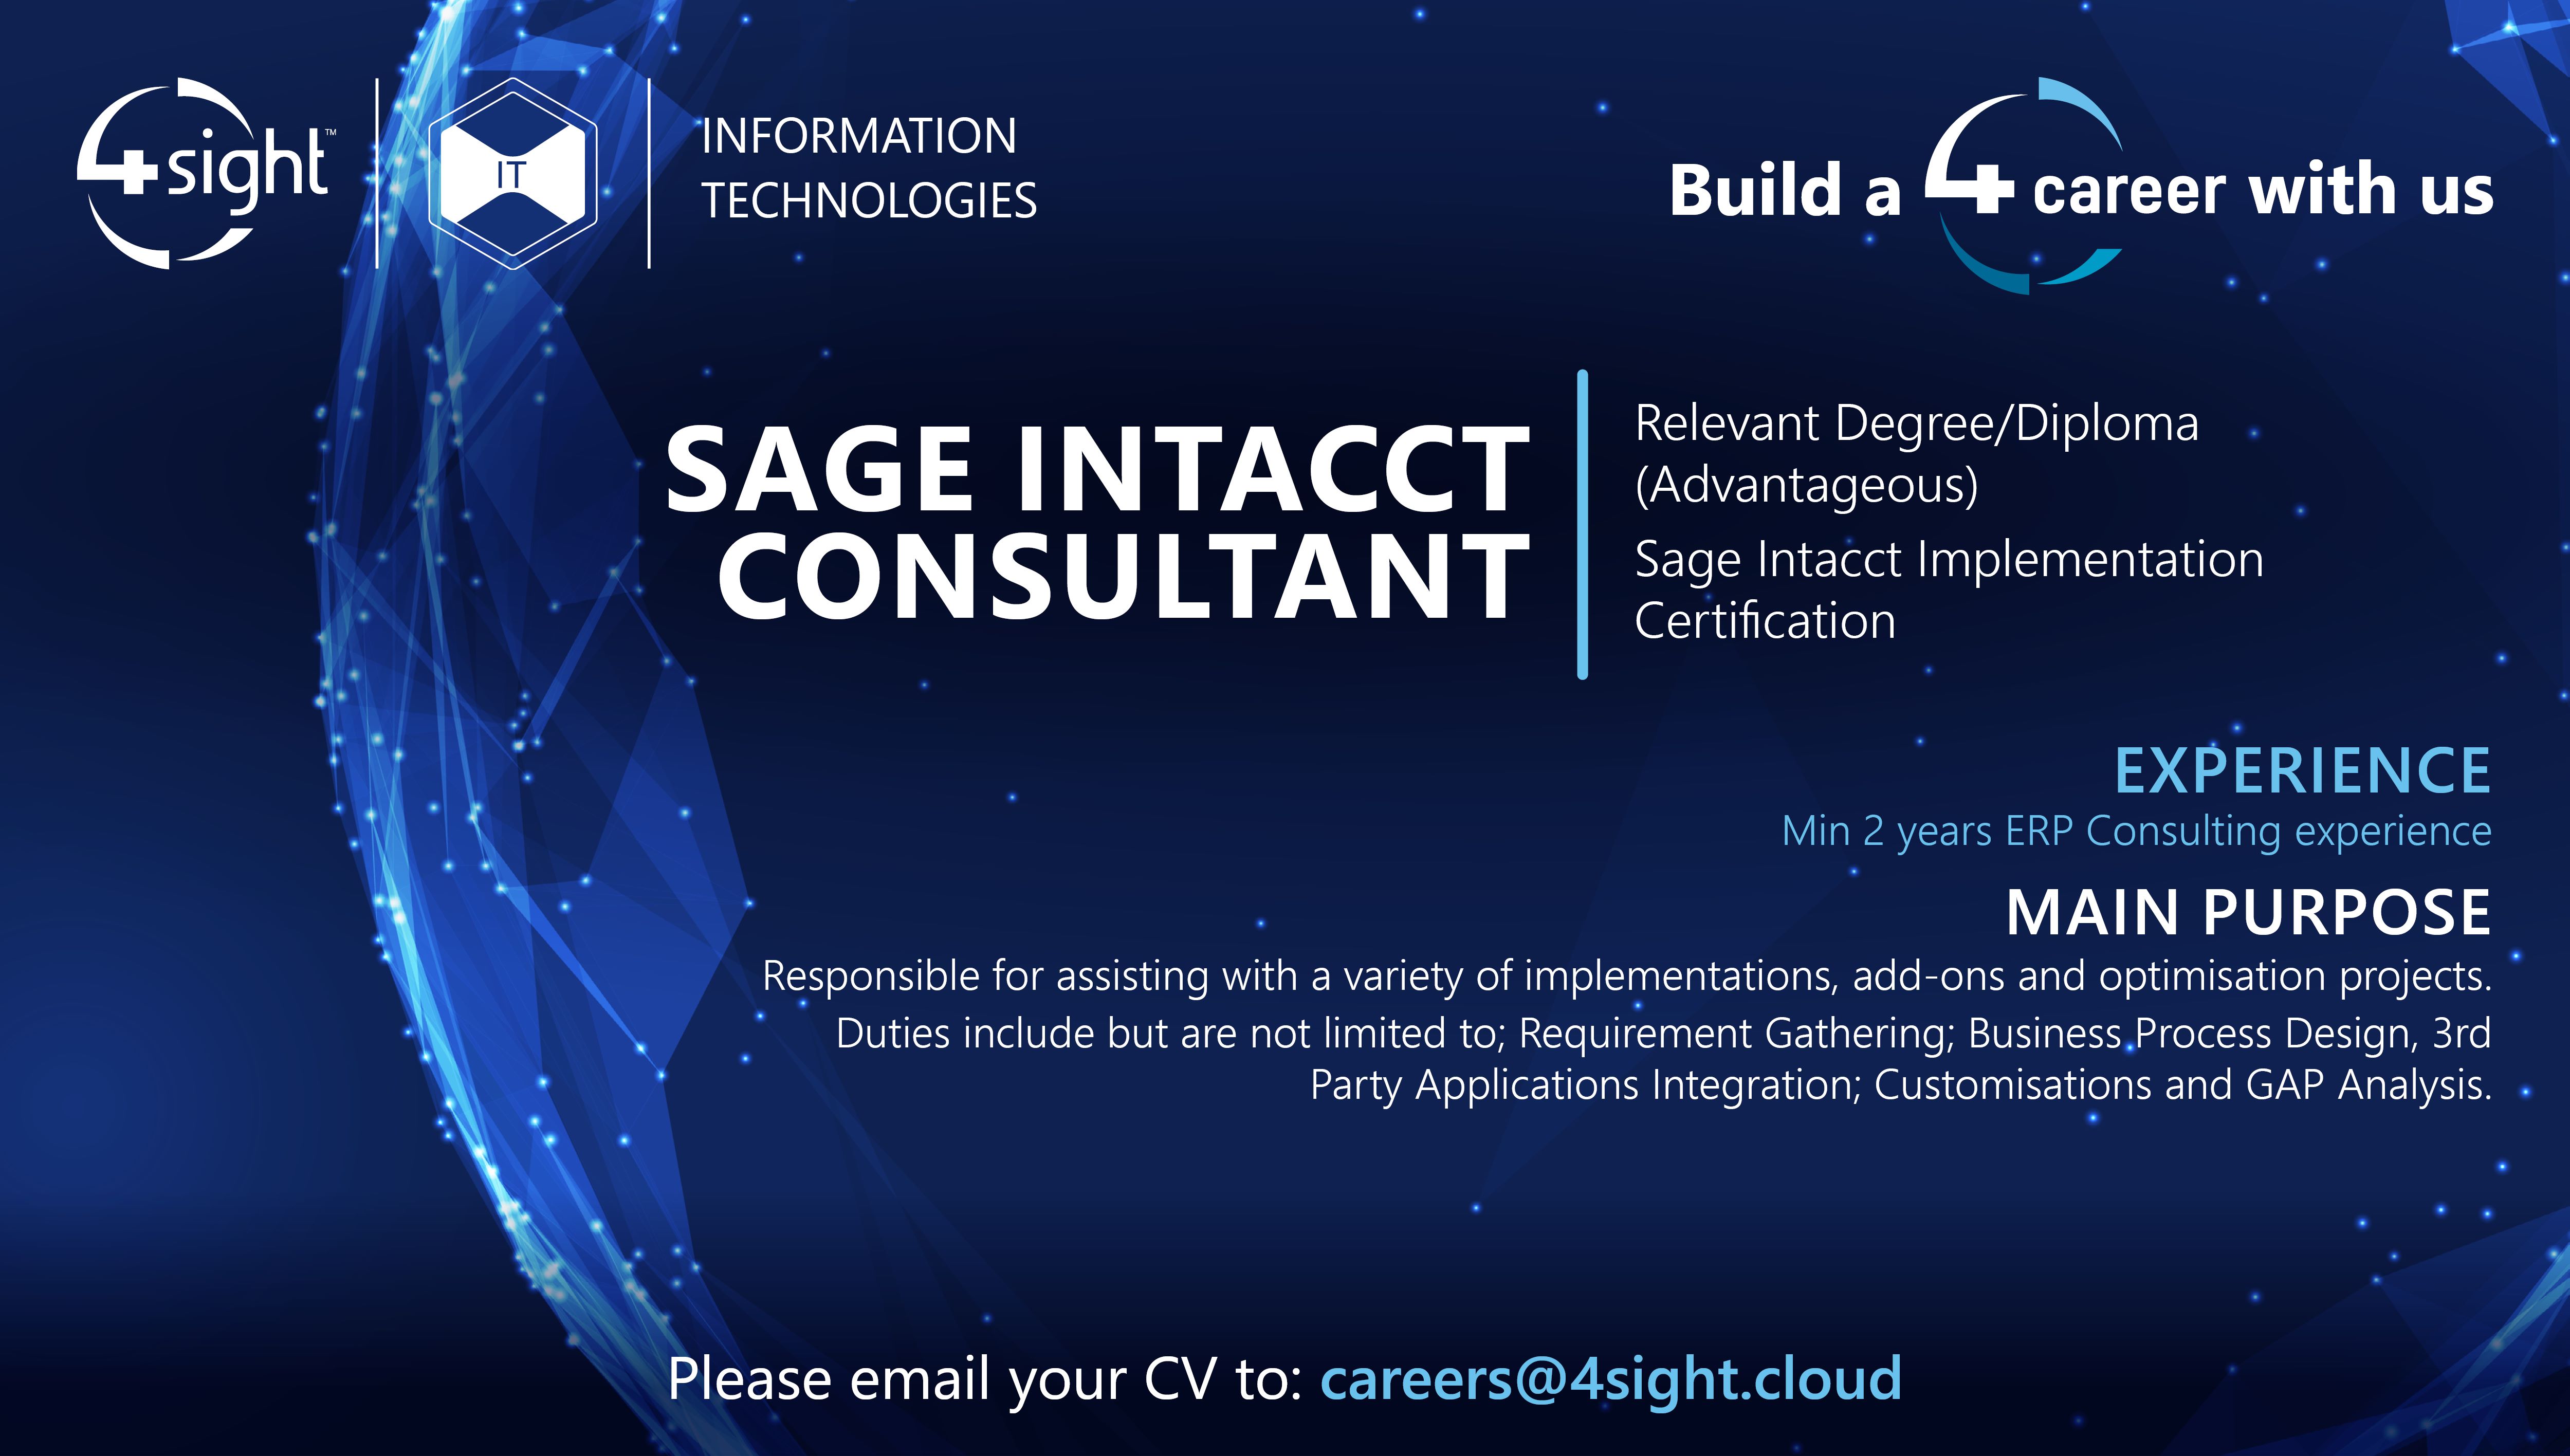 11.Sage Intacct Consultant IT Nov